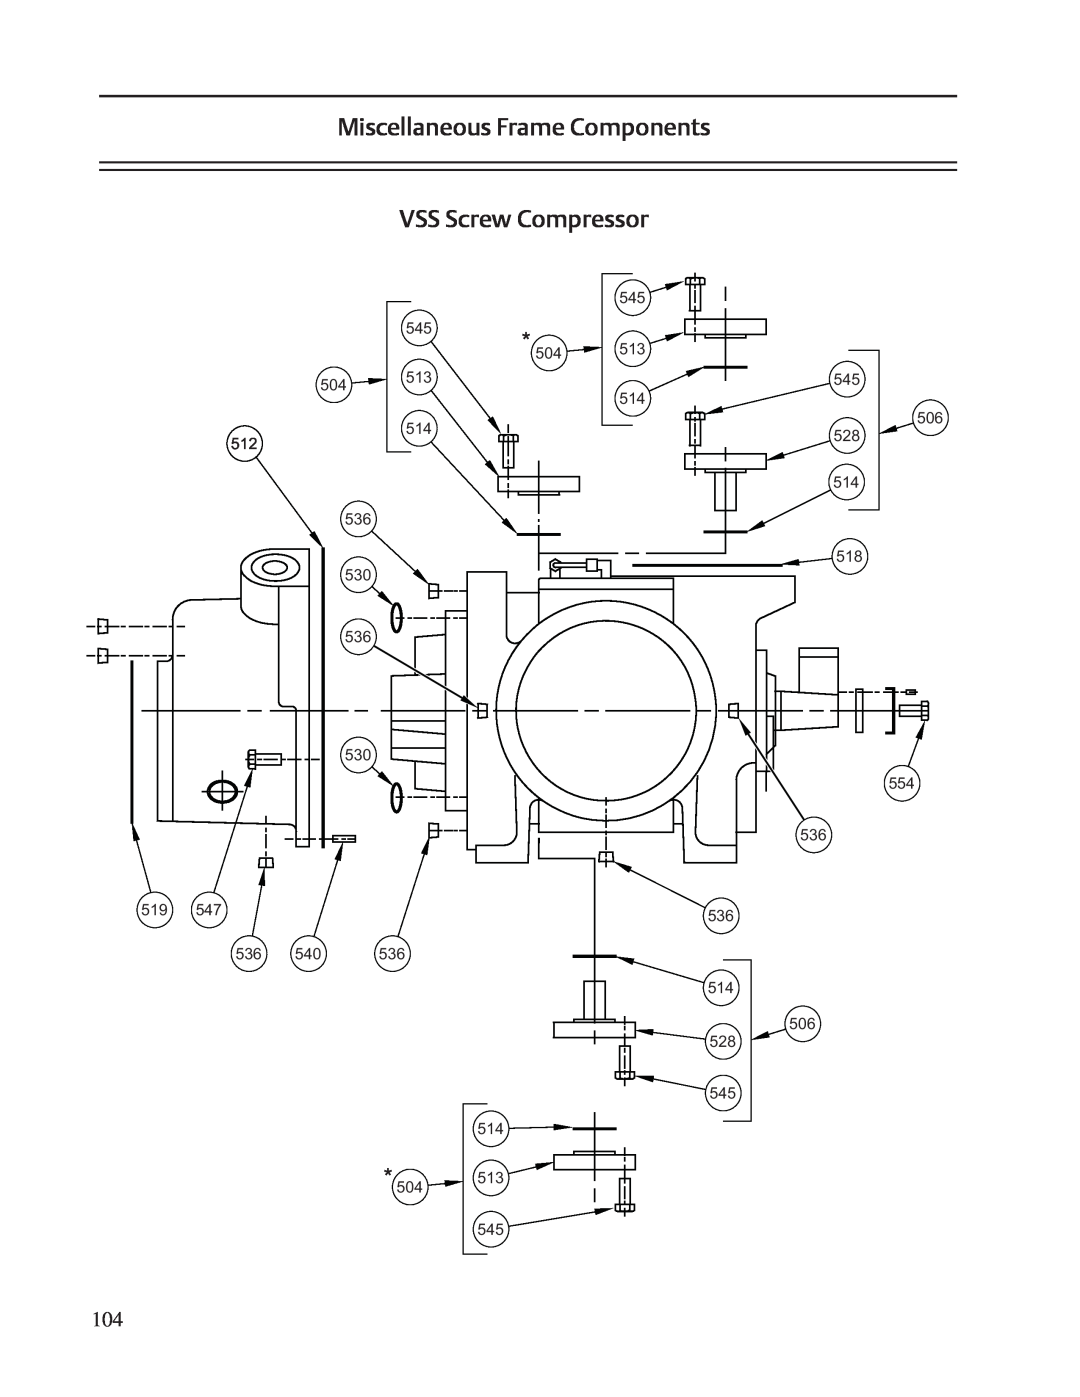 Emerson VSR, VSM service manual Miscellaneous Frame Components VSS Screw Compressor 